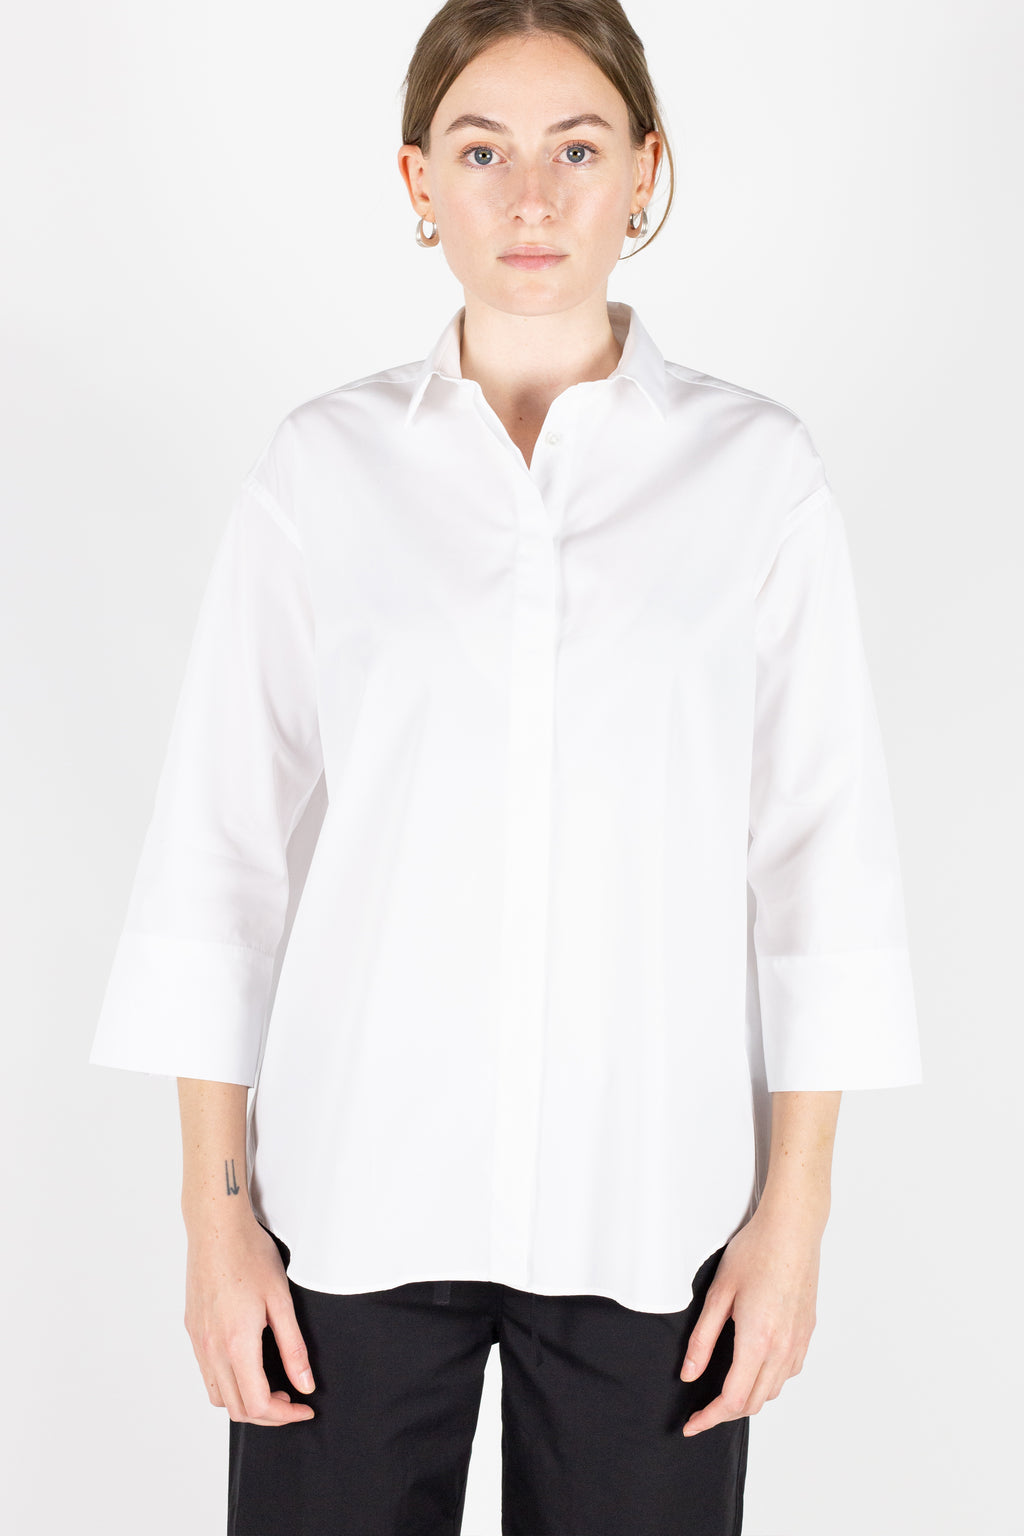 Women's white loose cotton poplin shirt. Regular collar, ¾ length sleeves.